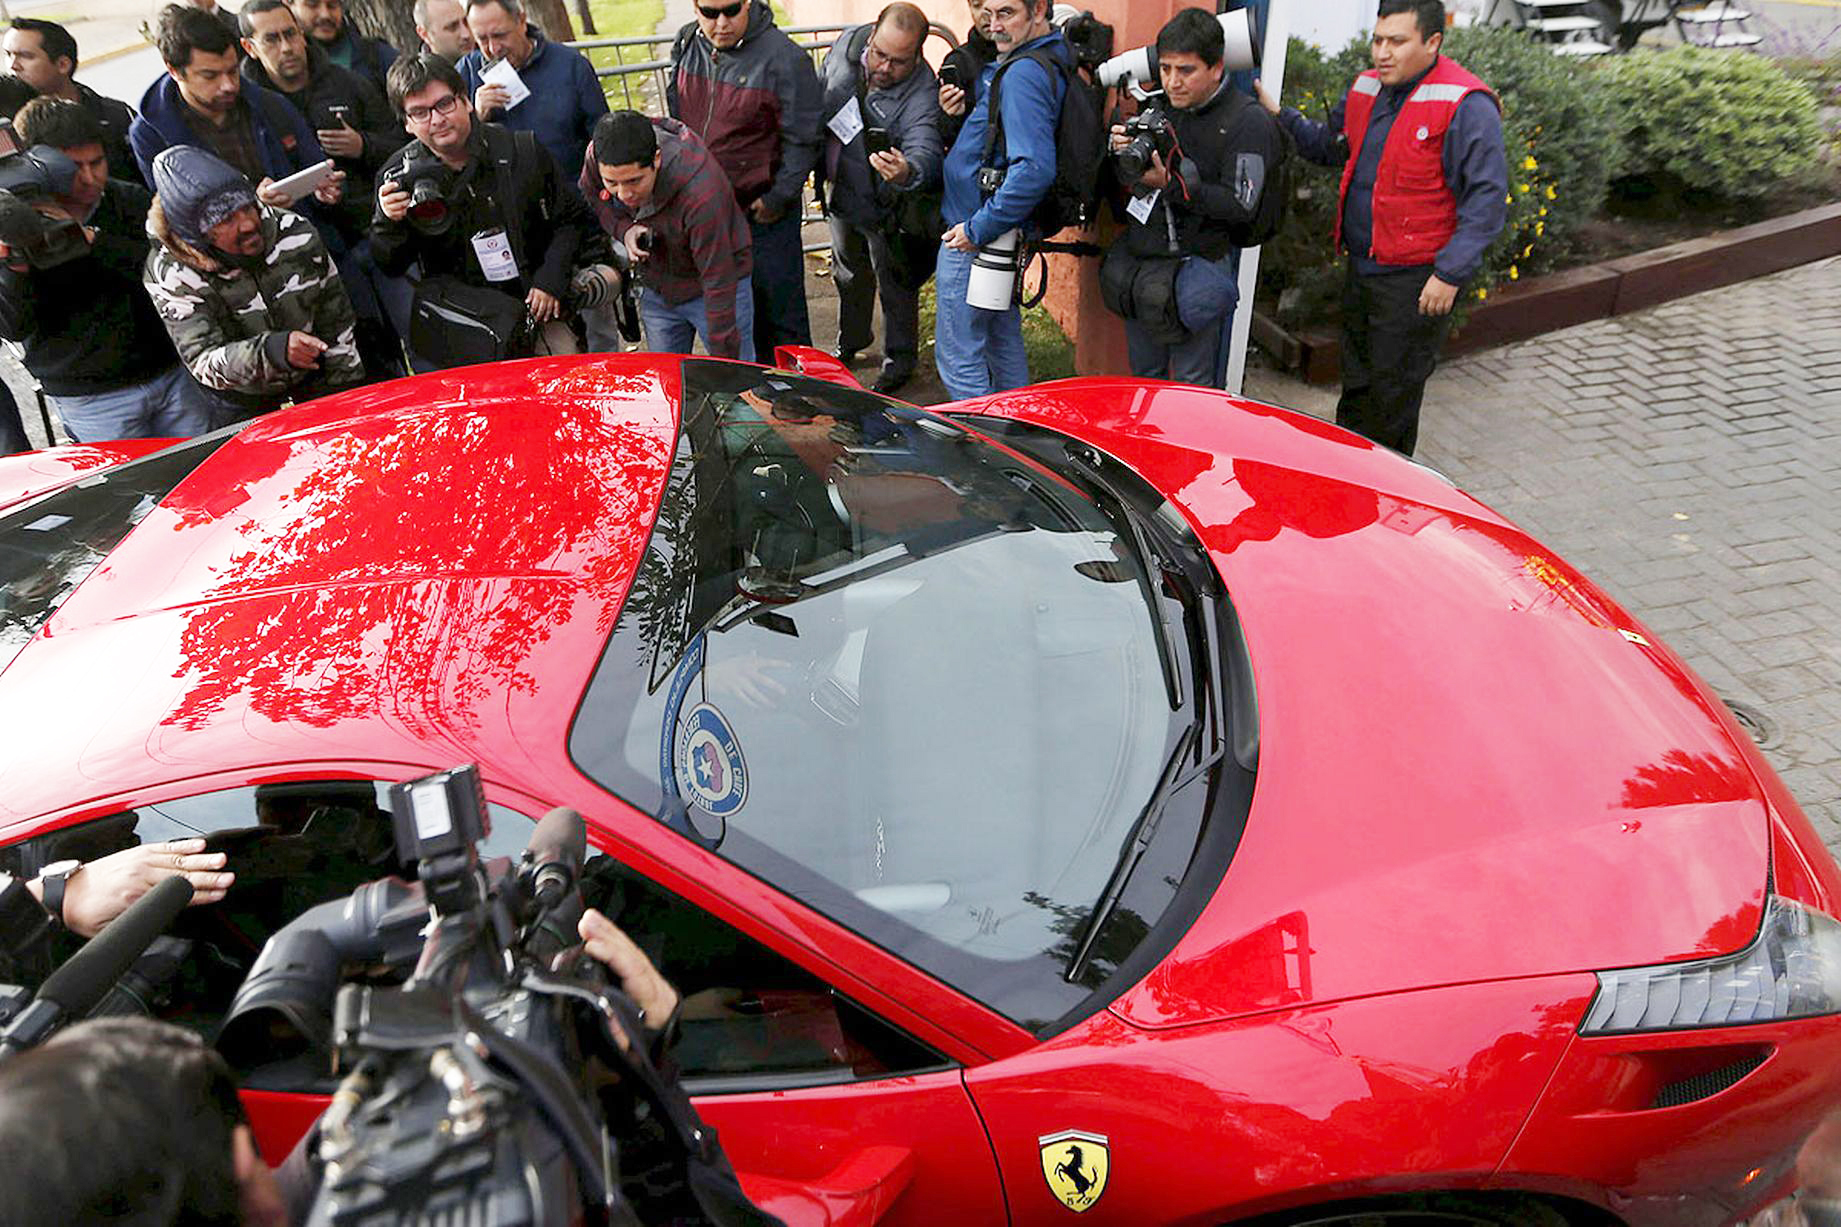 A-red-Ferrari-belonging-to-Arturo-Vidal